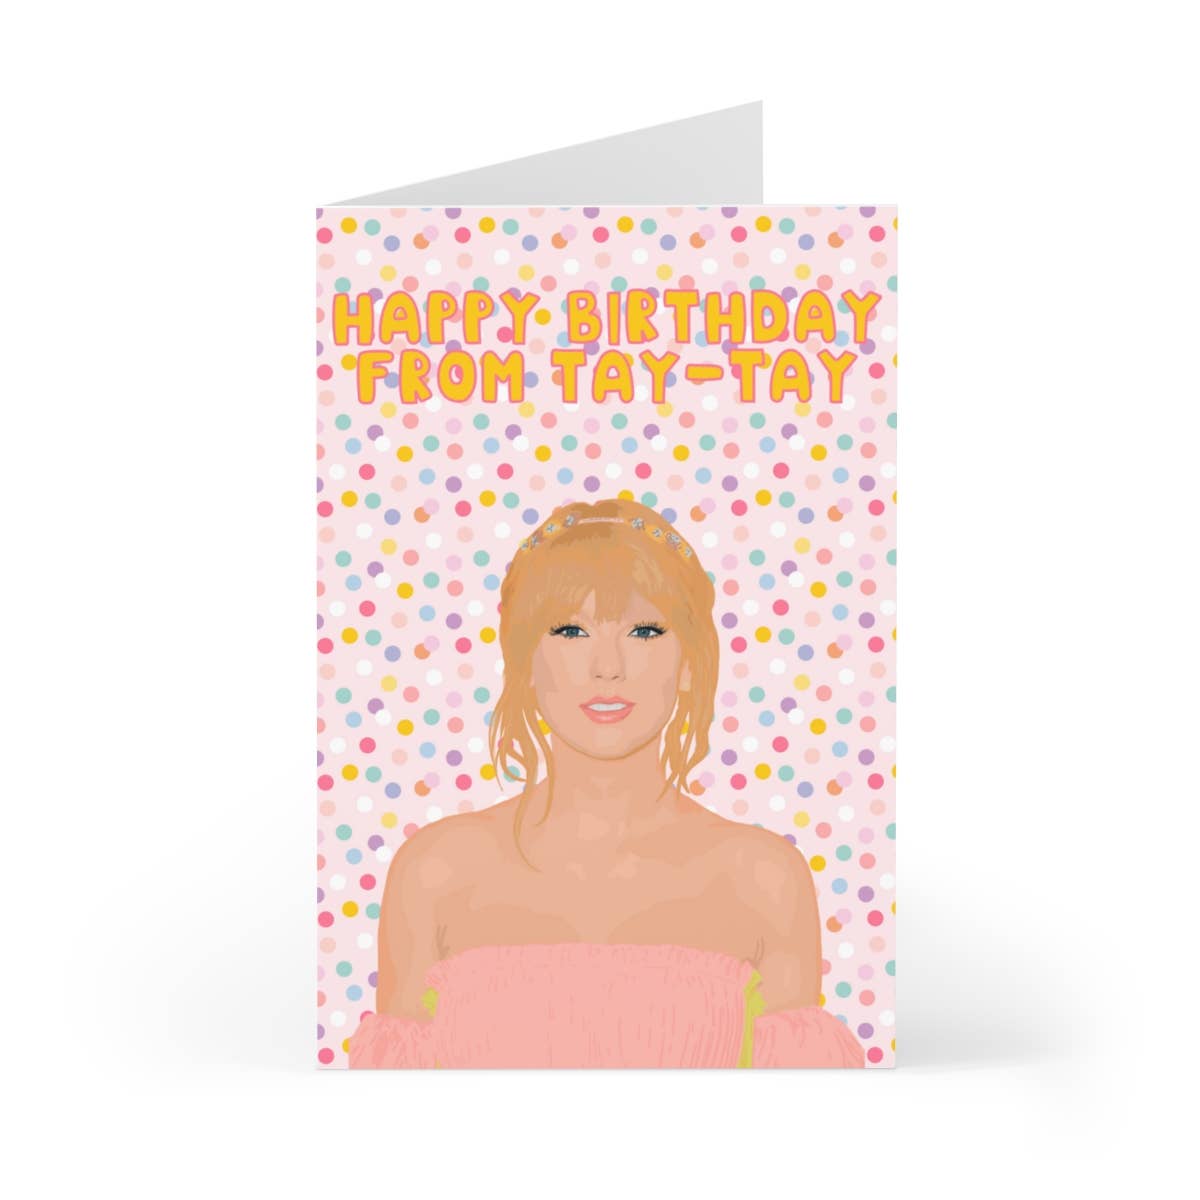 Tis the Damn Season Taylor Swift Card - Blank